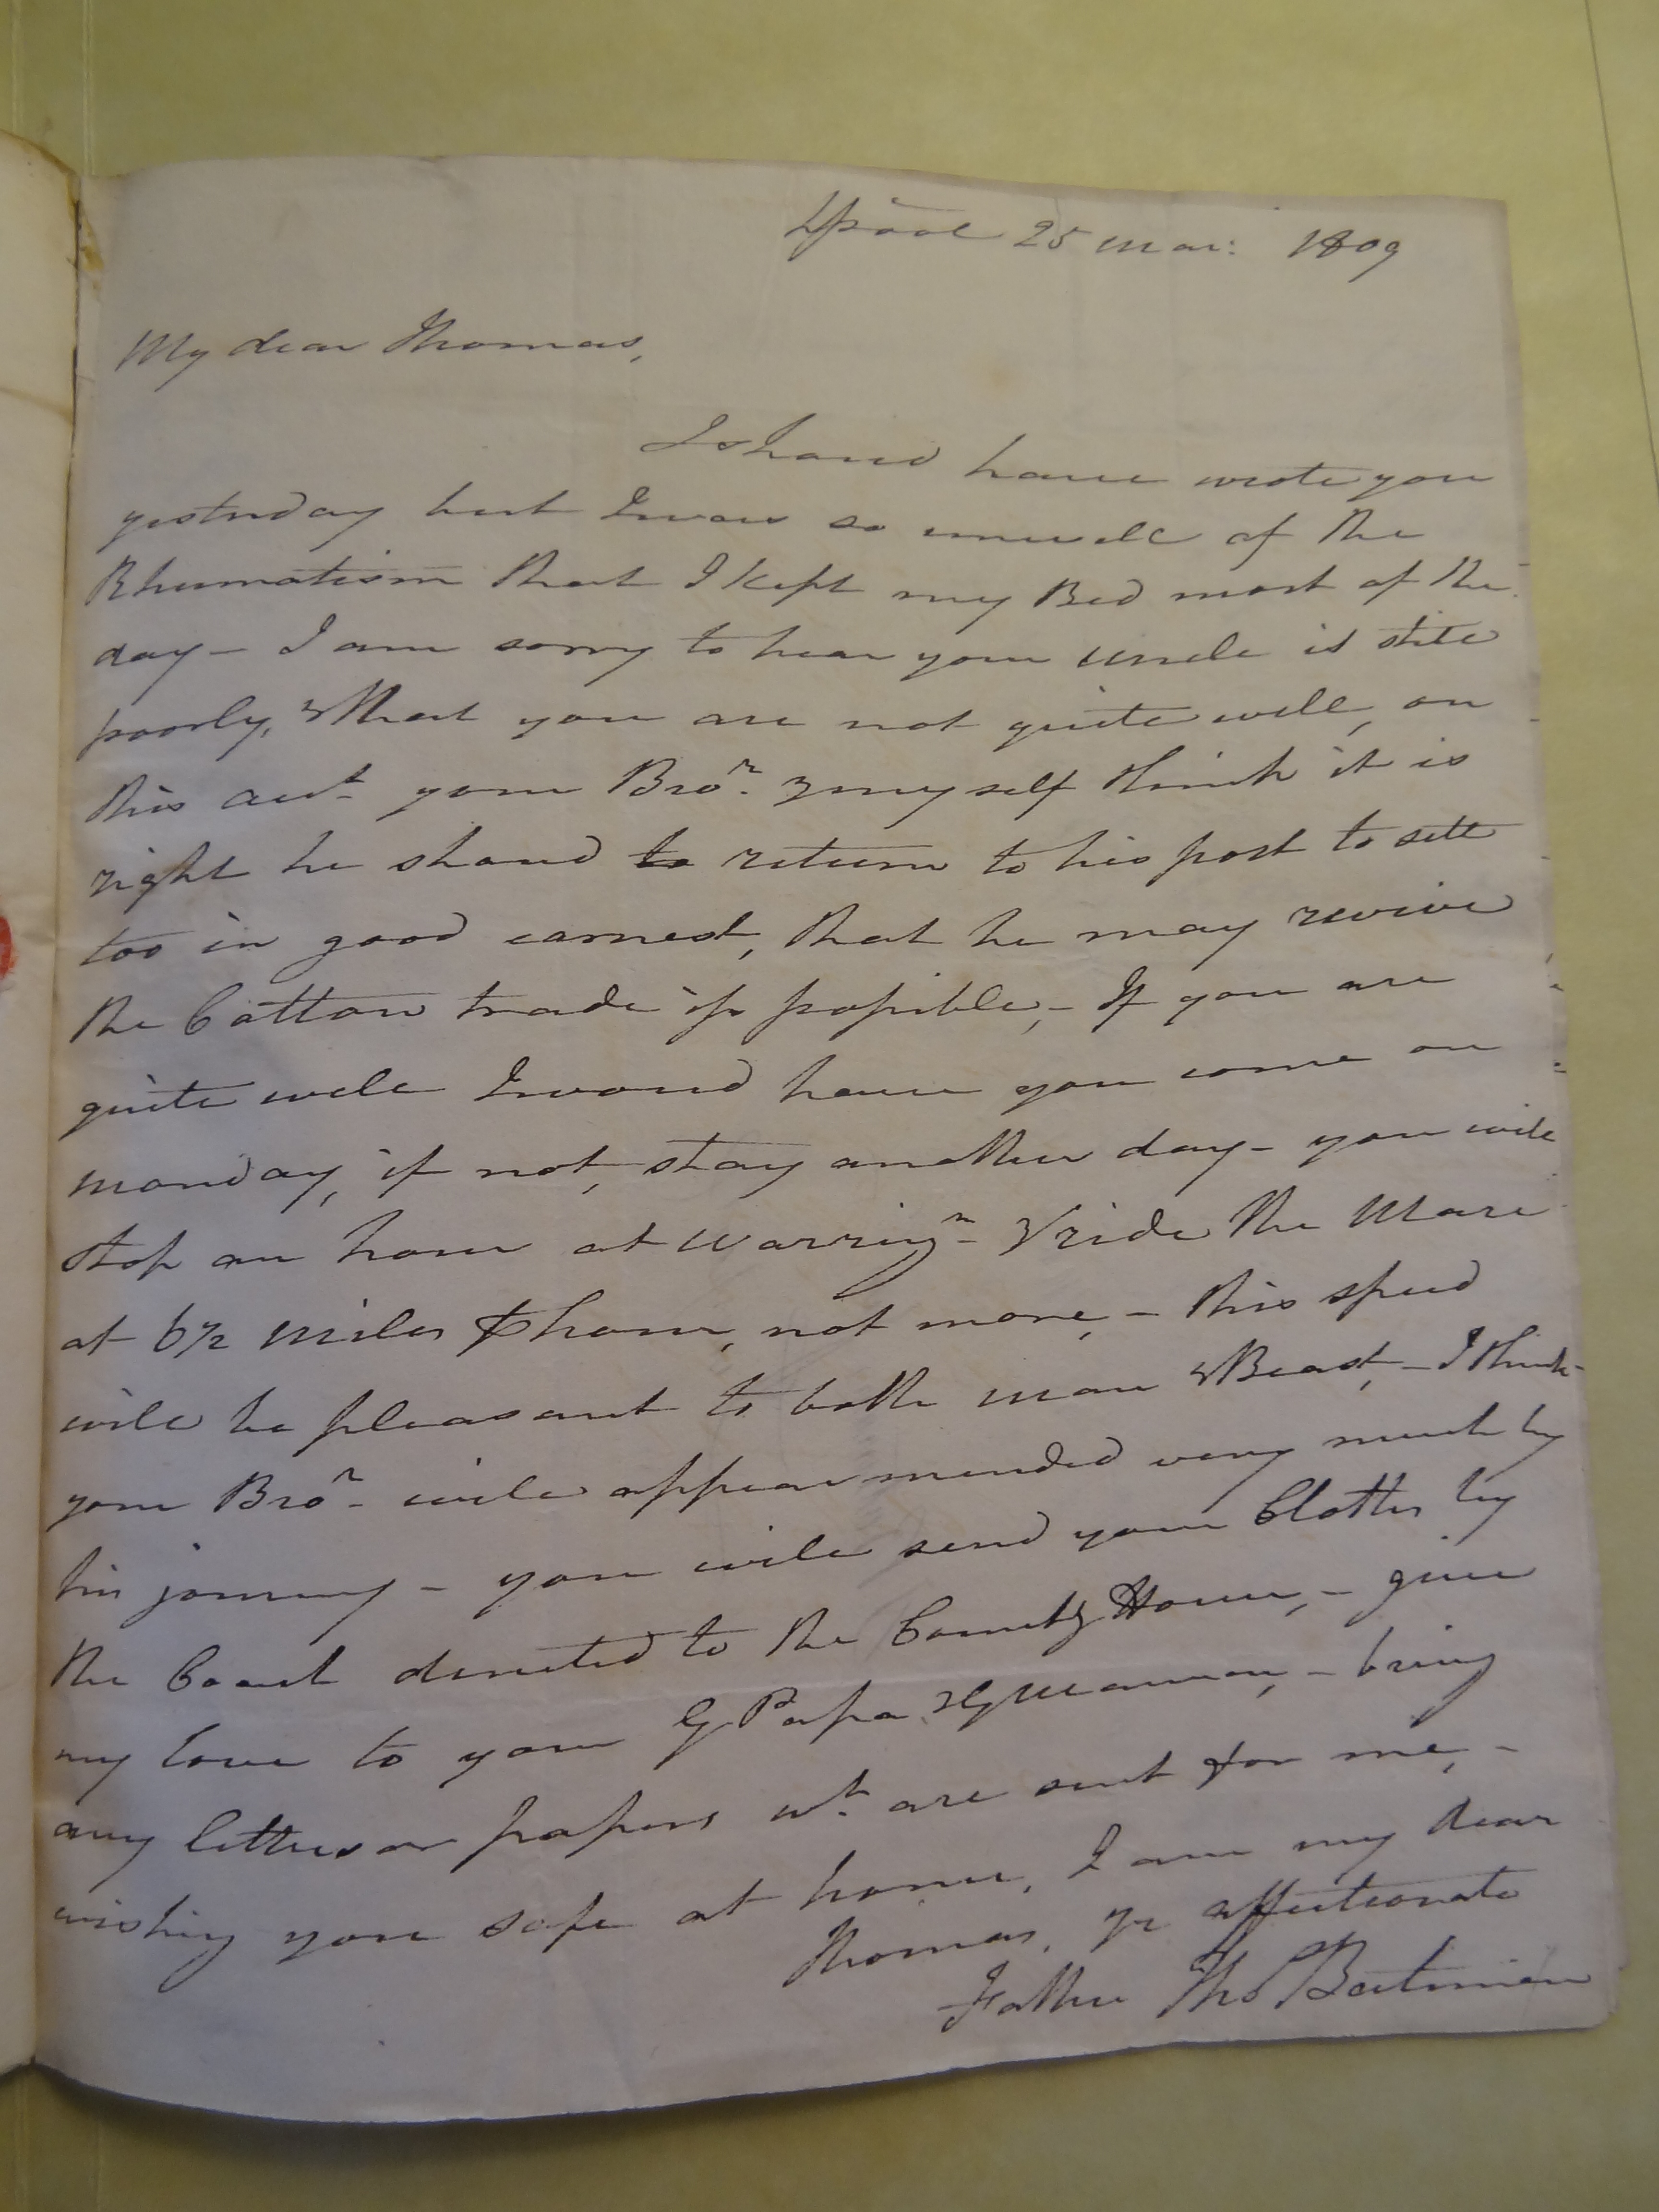 Image #1 of letter: Thomas Bateman (senior) to Thomas Bateman (junior), 25 March 1809